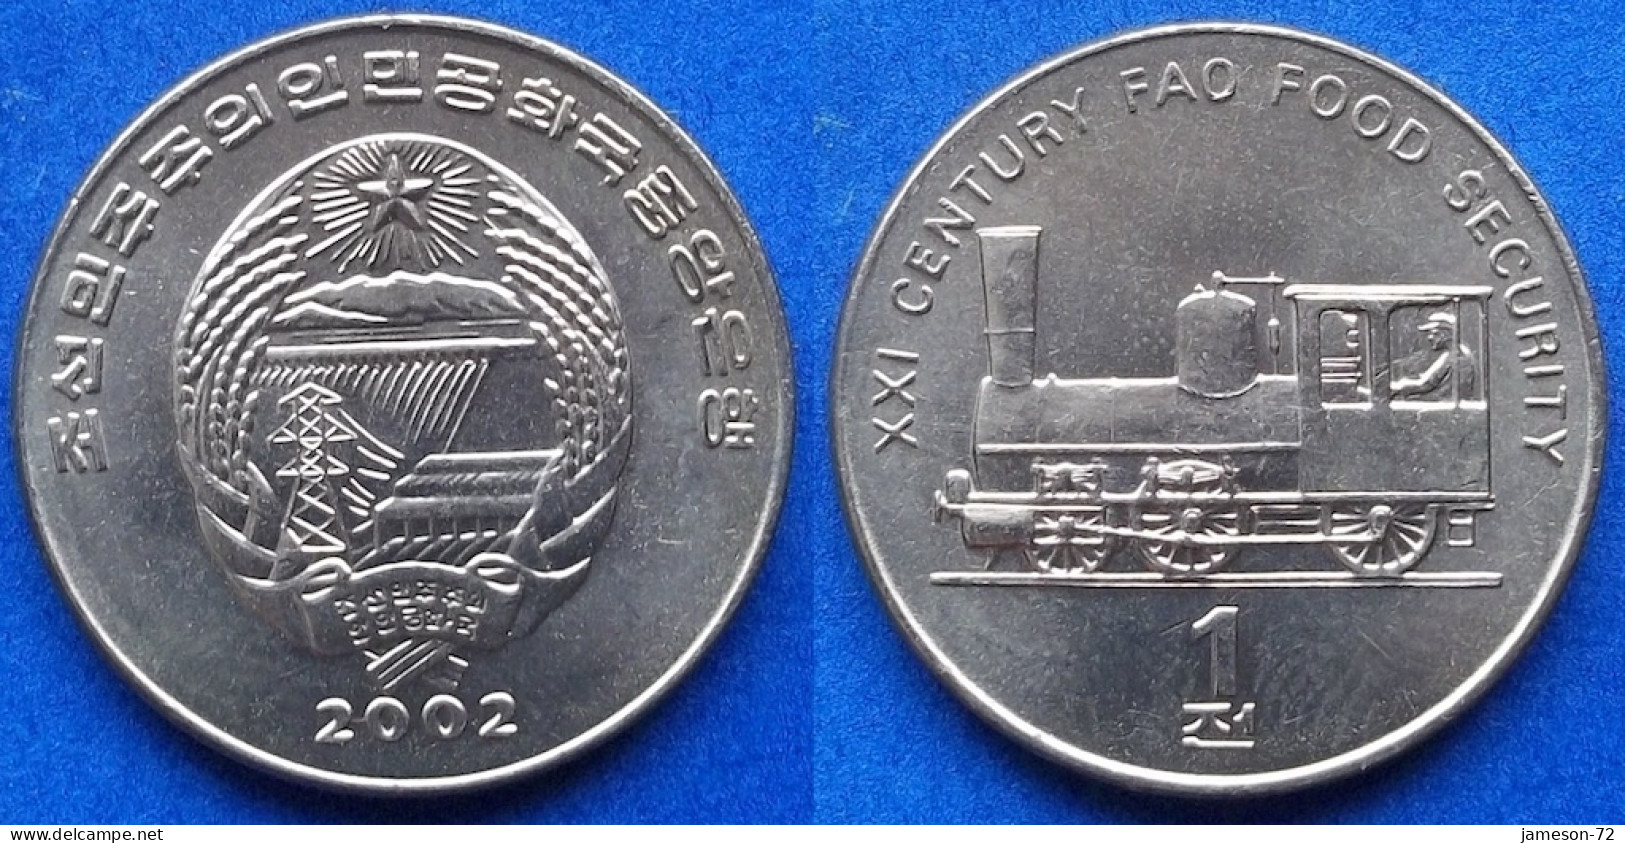 NORTH KOREA - 1 Chon 2002 "Antique Steam Locomotive" KM# 195 Democratic Peoples Republic (1948) - Edelweiss Coins - Korea, North